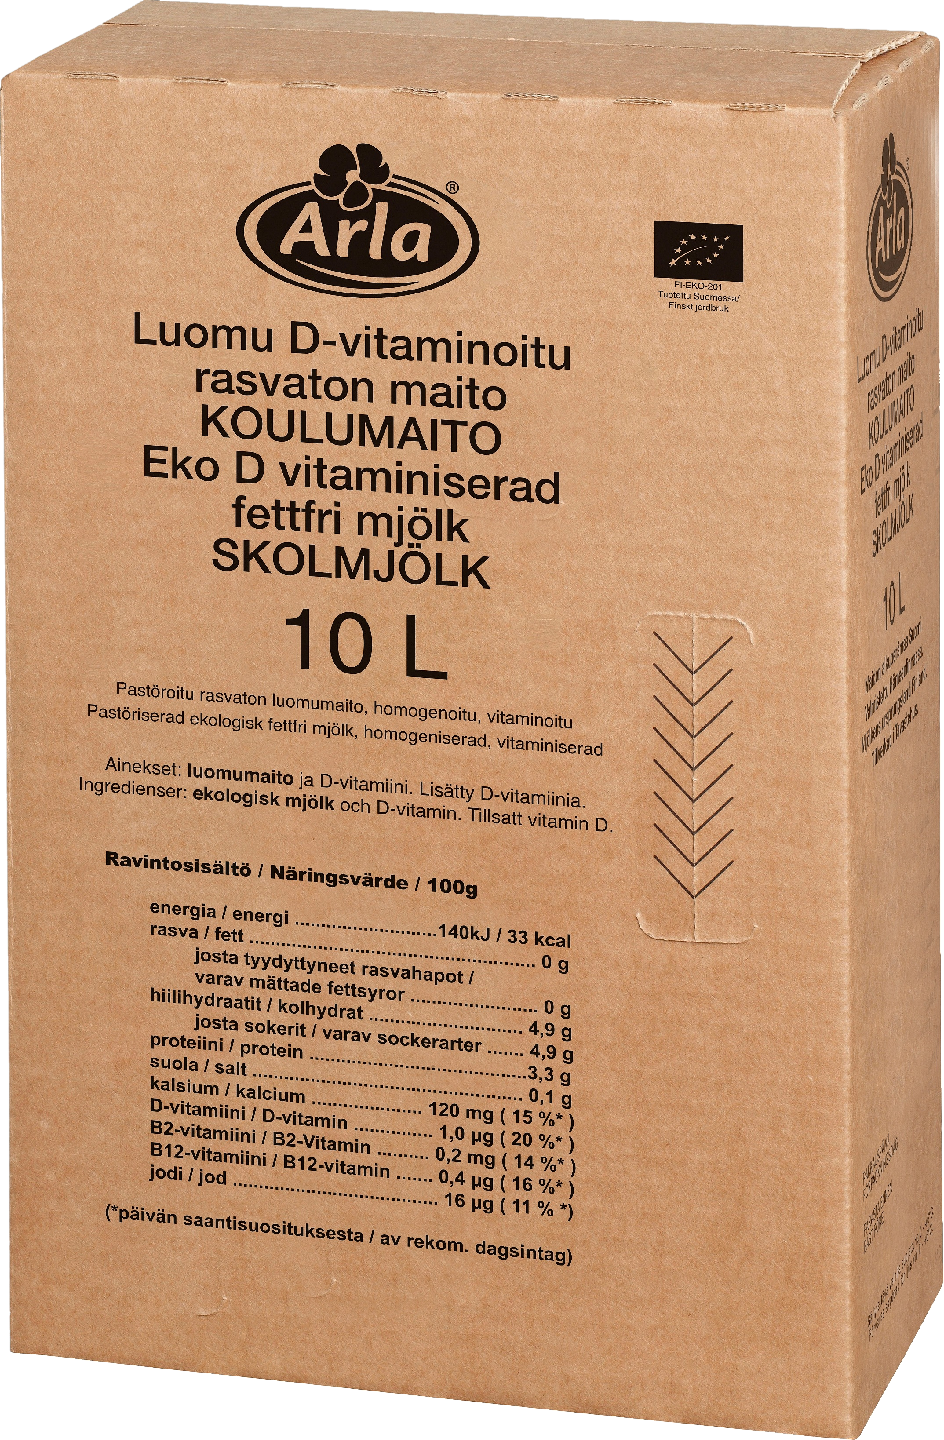 Arla Luomu D-vitaminoitu rasvaton maito novobox 10 L